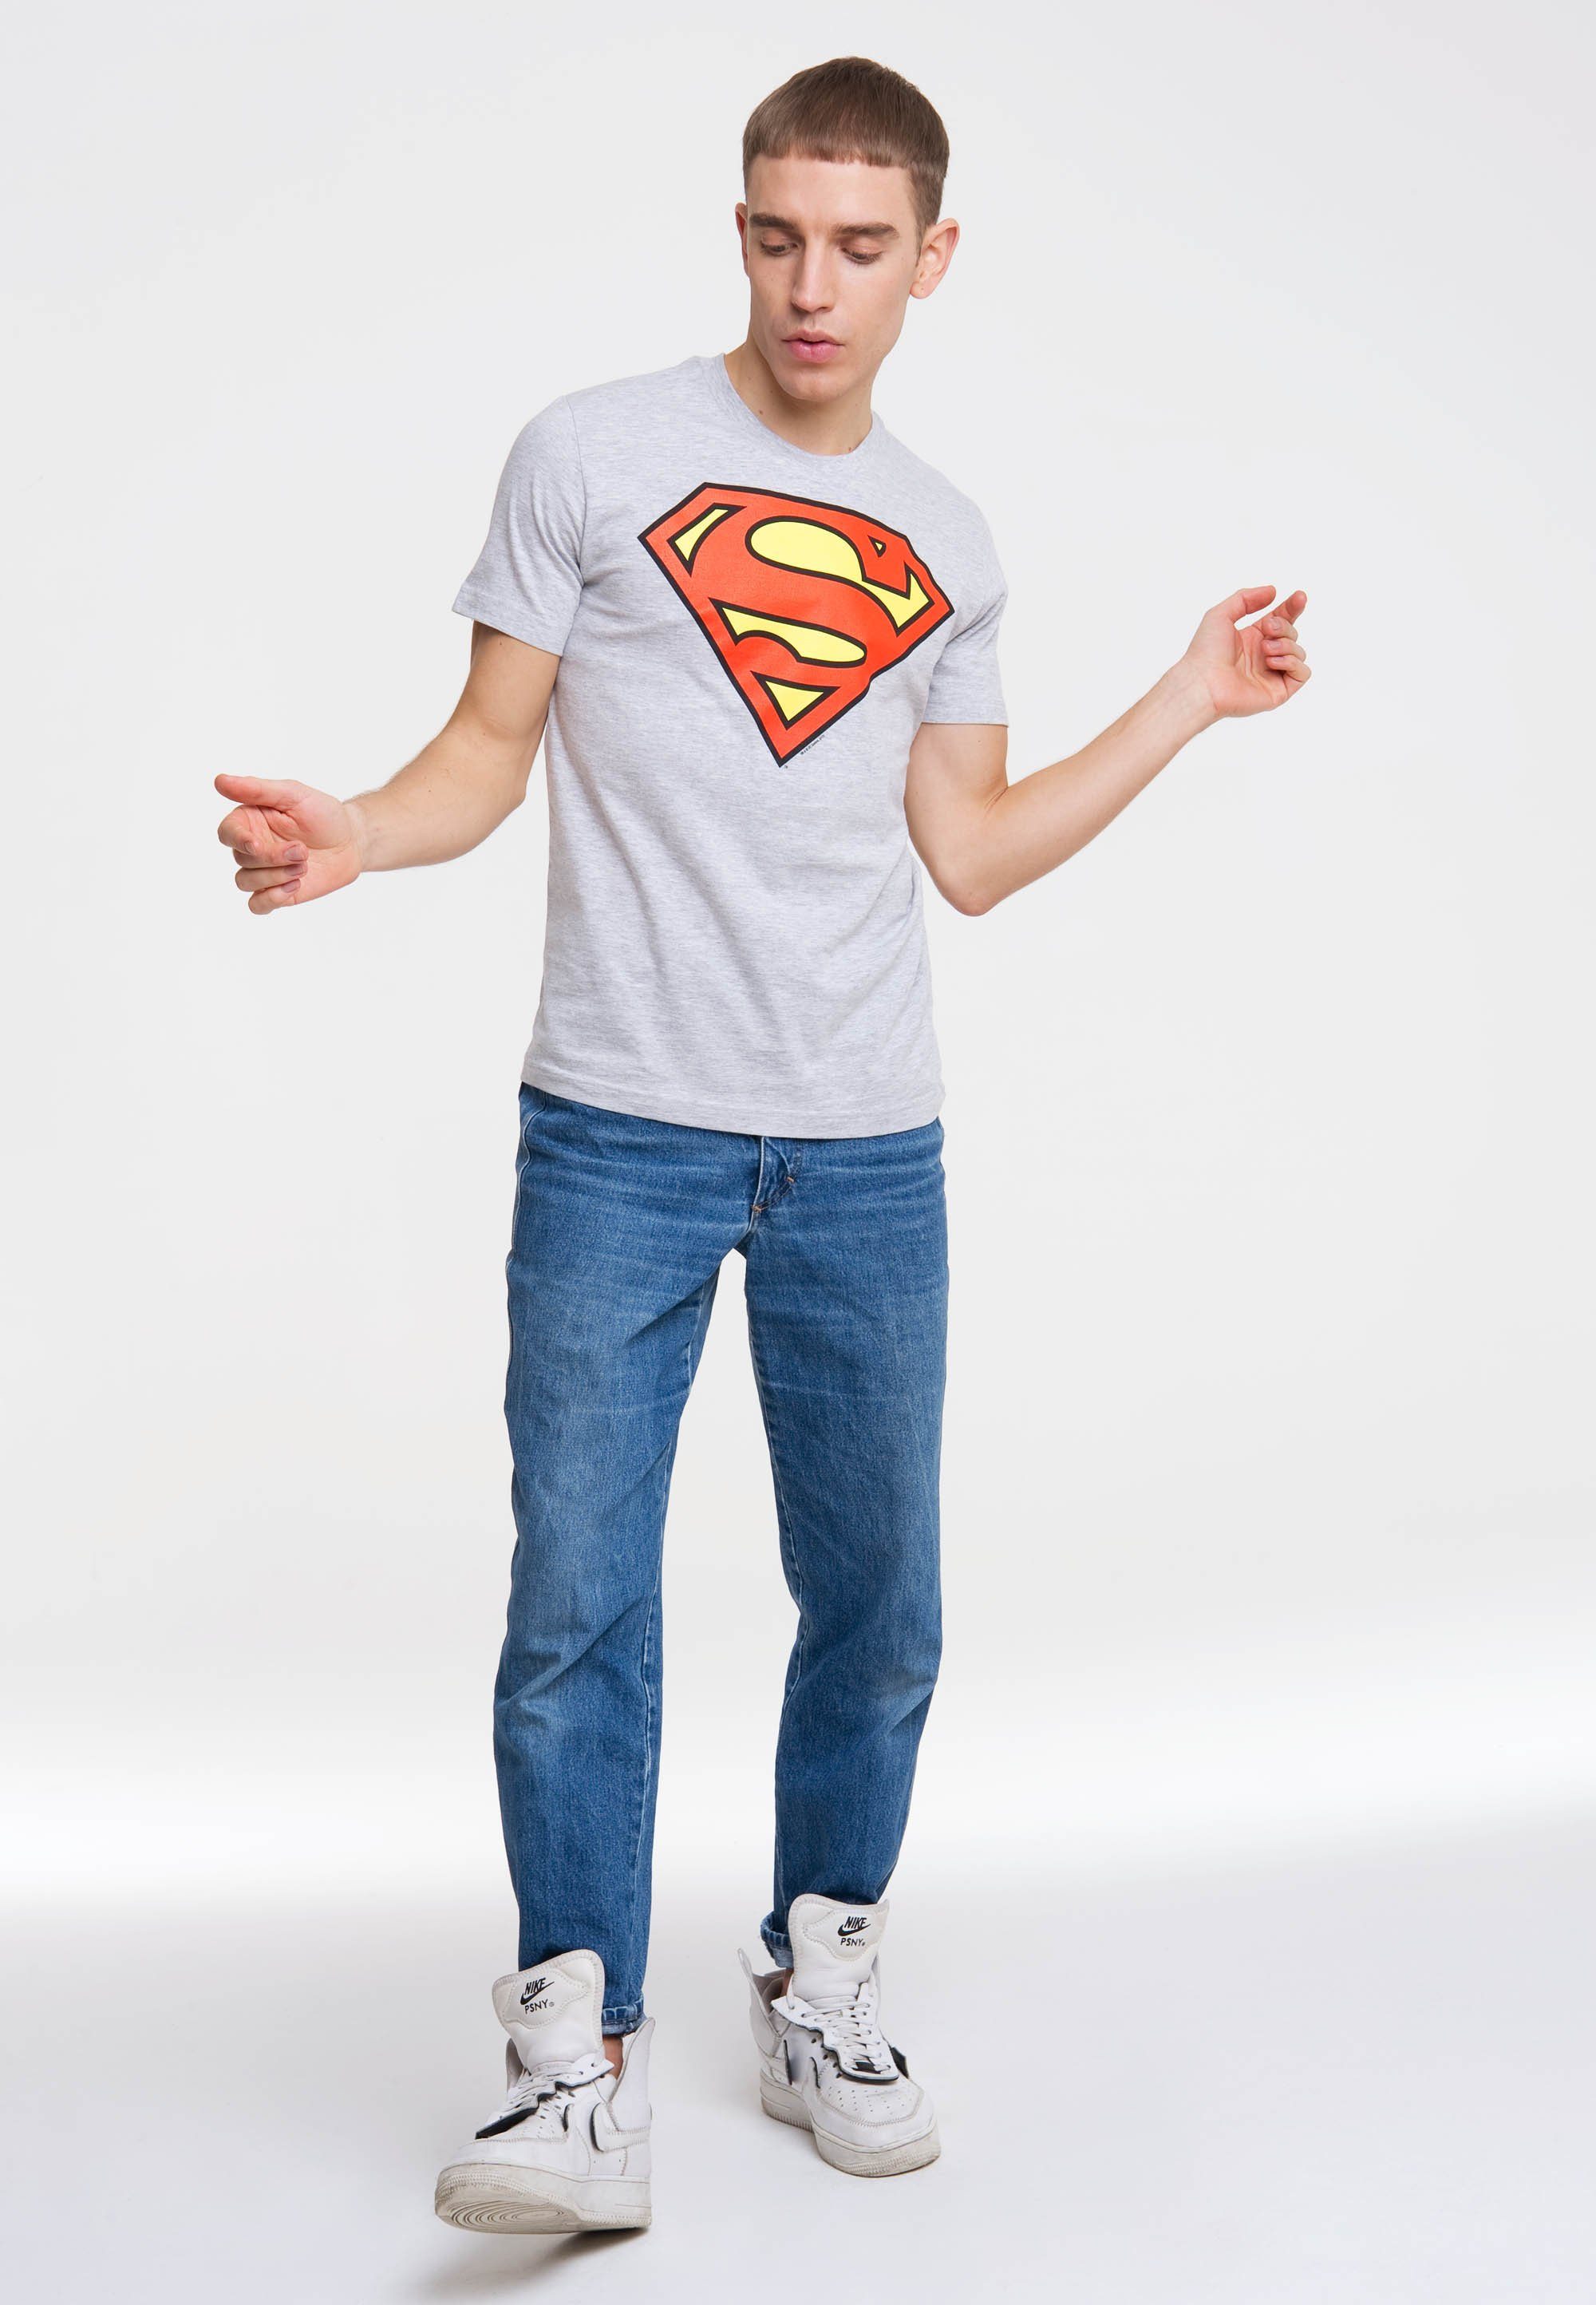 LOGOSHIRT T-Shirt SUPERMAN - LOGO mit Superhelden-Logo | T-Shirts